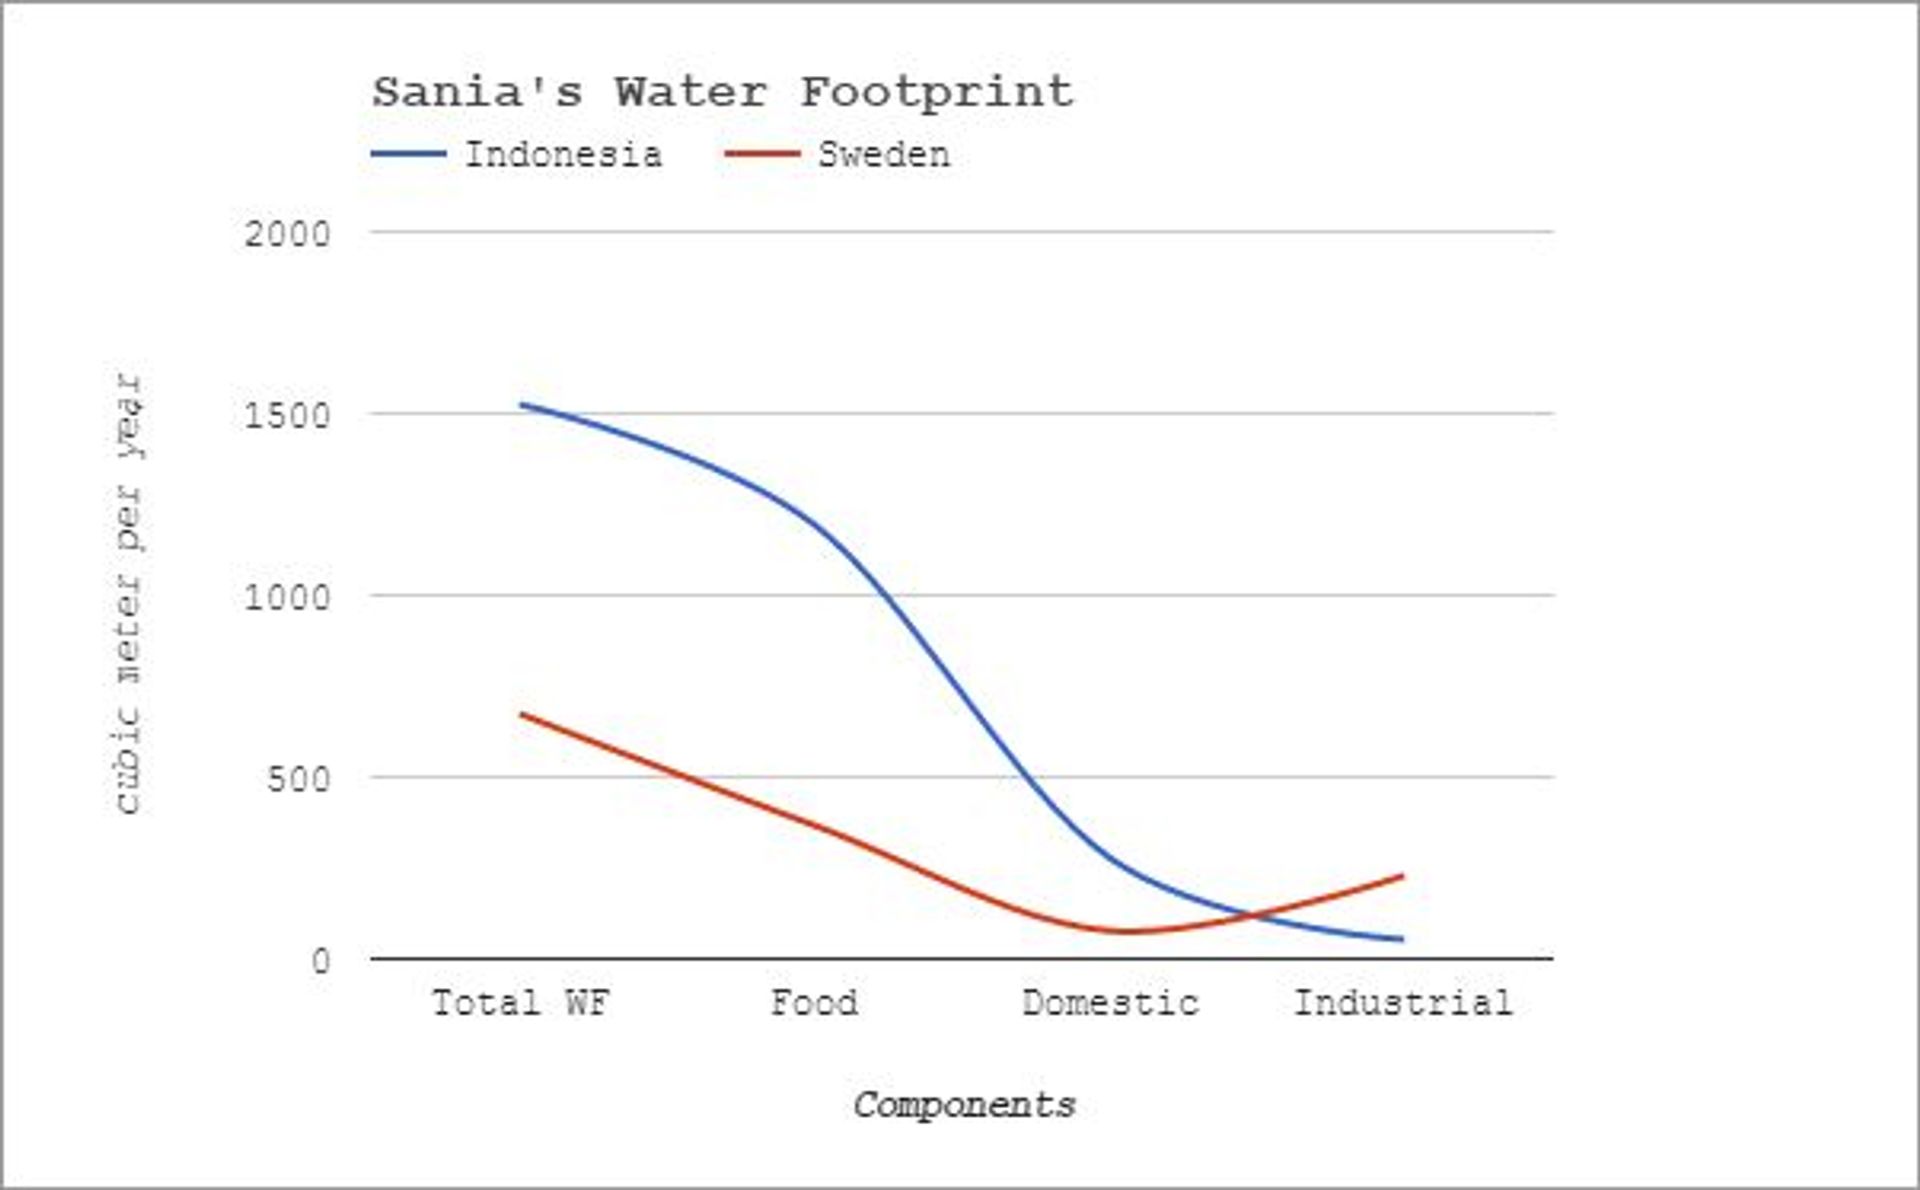 Sania water footprint total